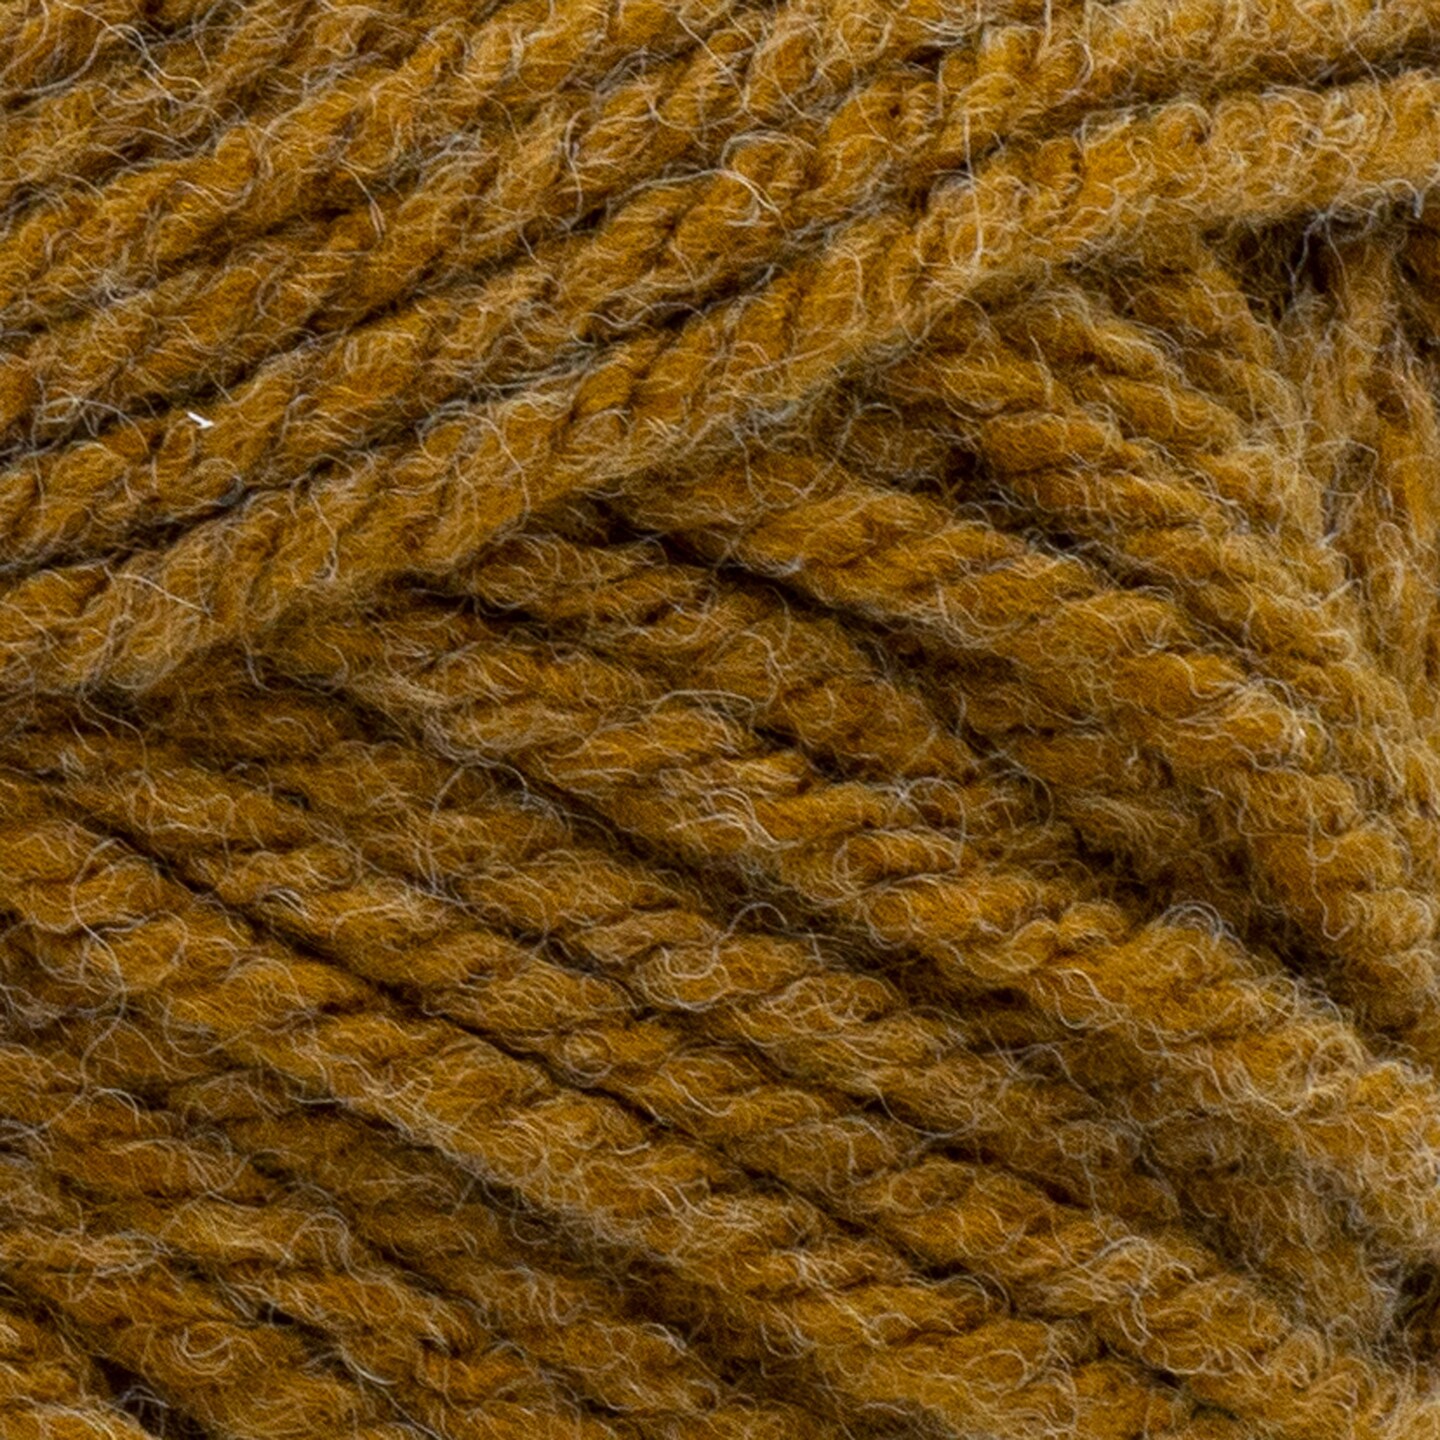  Lion Brand Hue + Me Yarn for Knitting, Crocheting, and